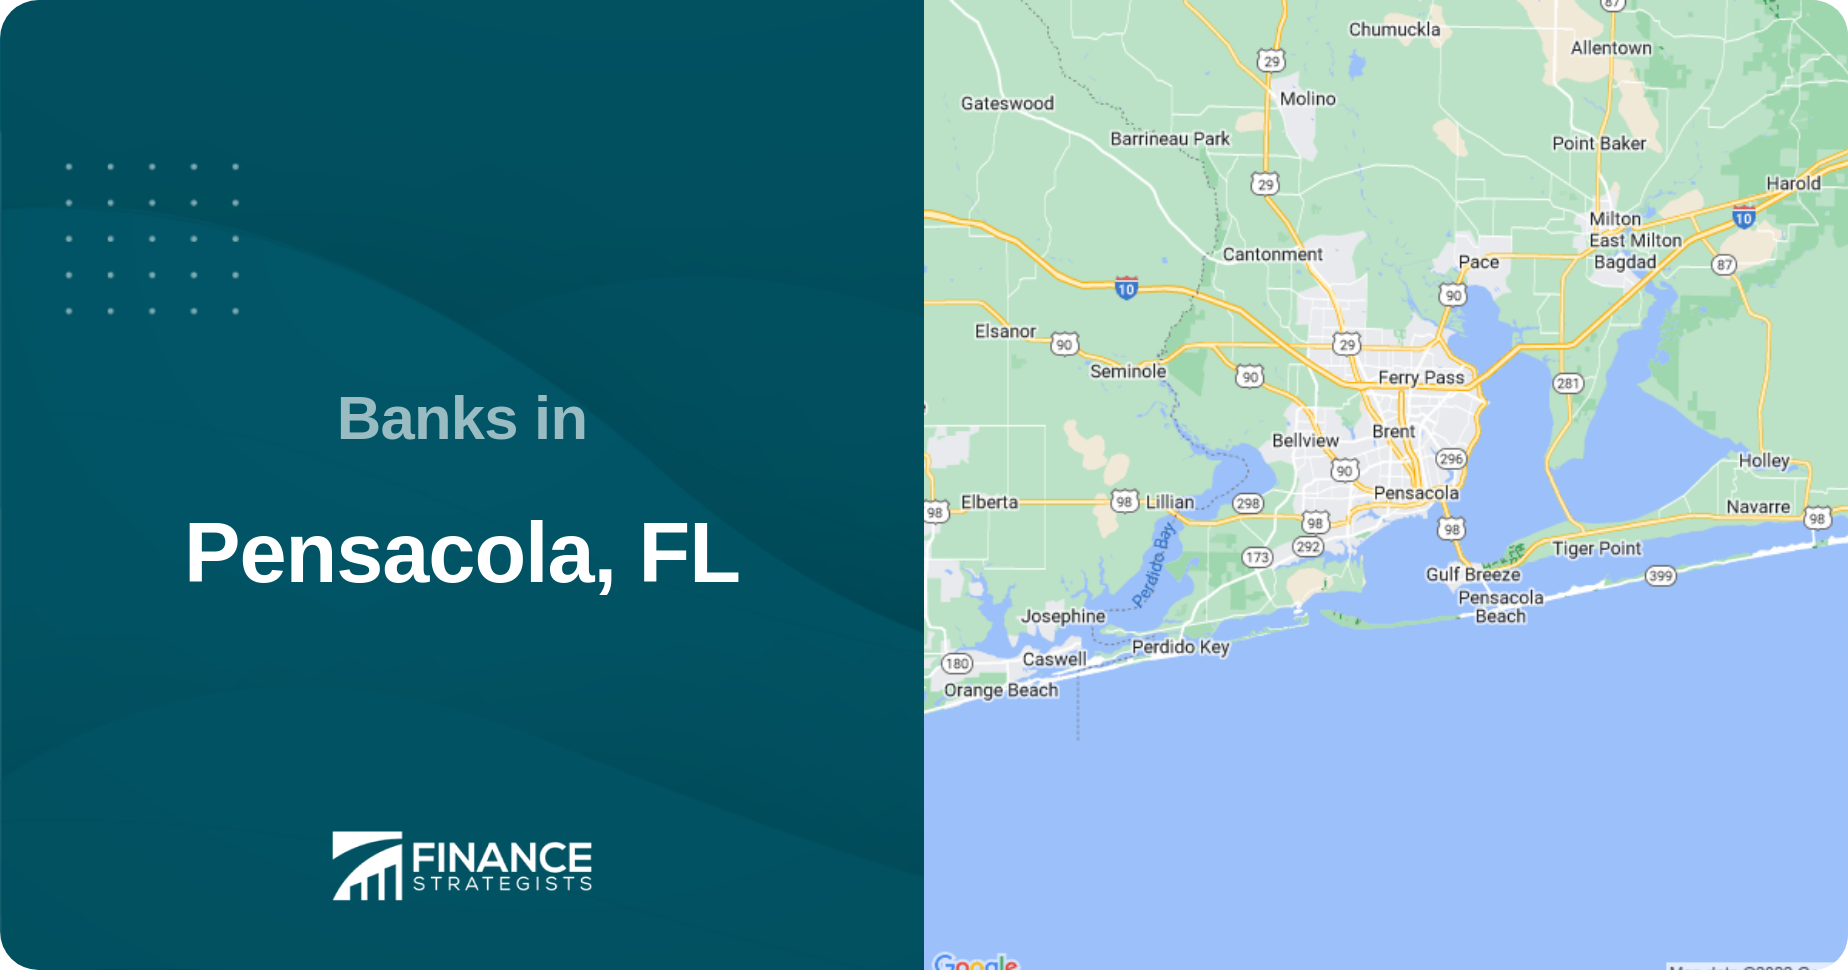 Banks in Pensacola, FL